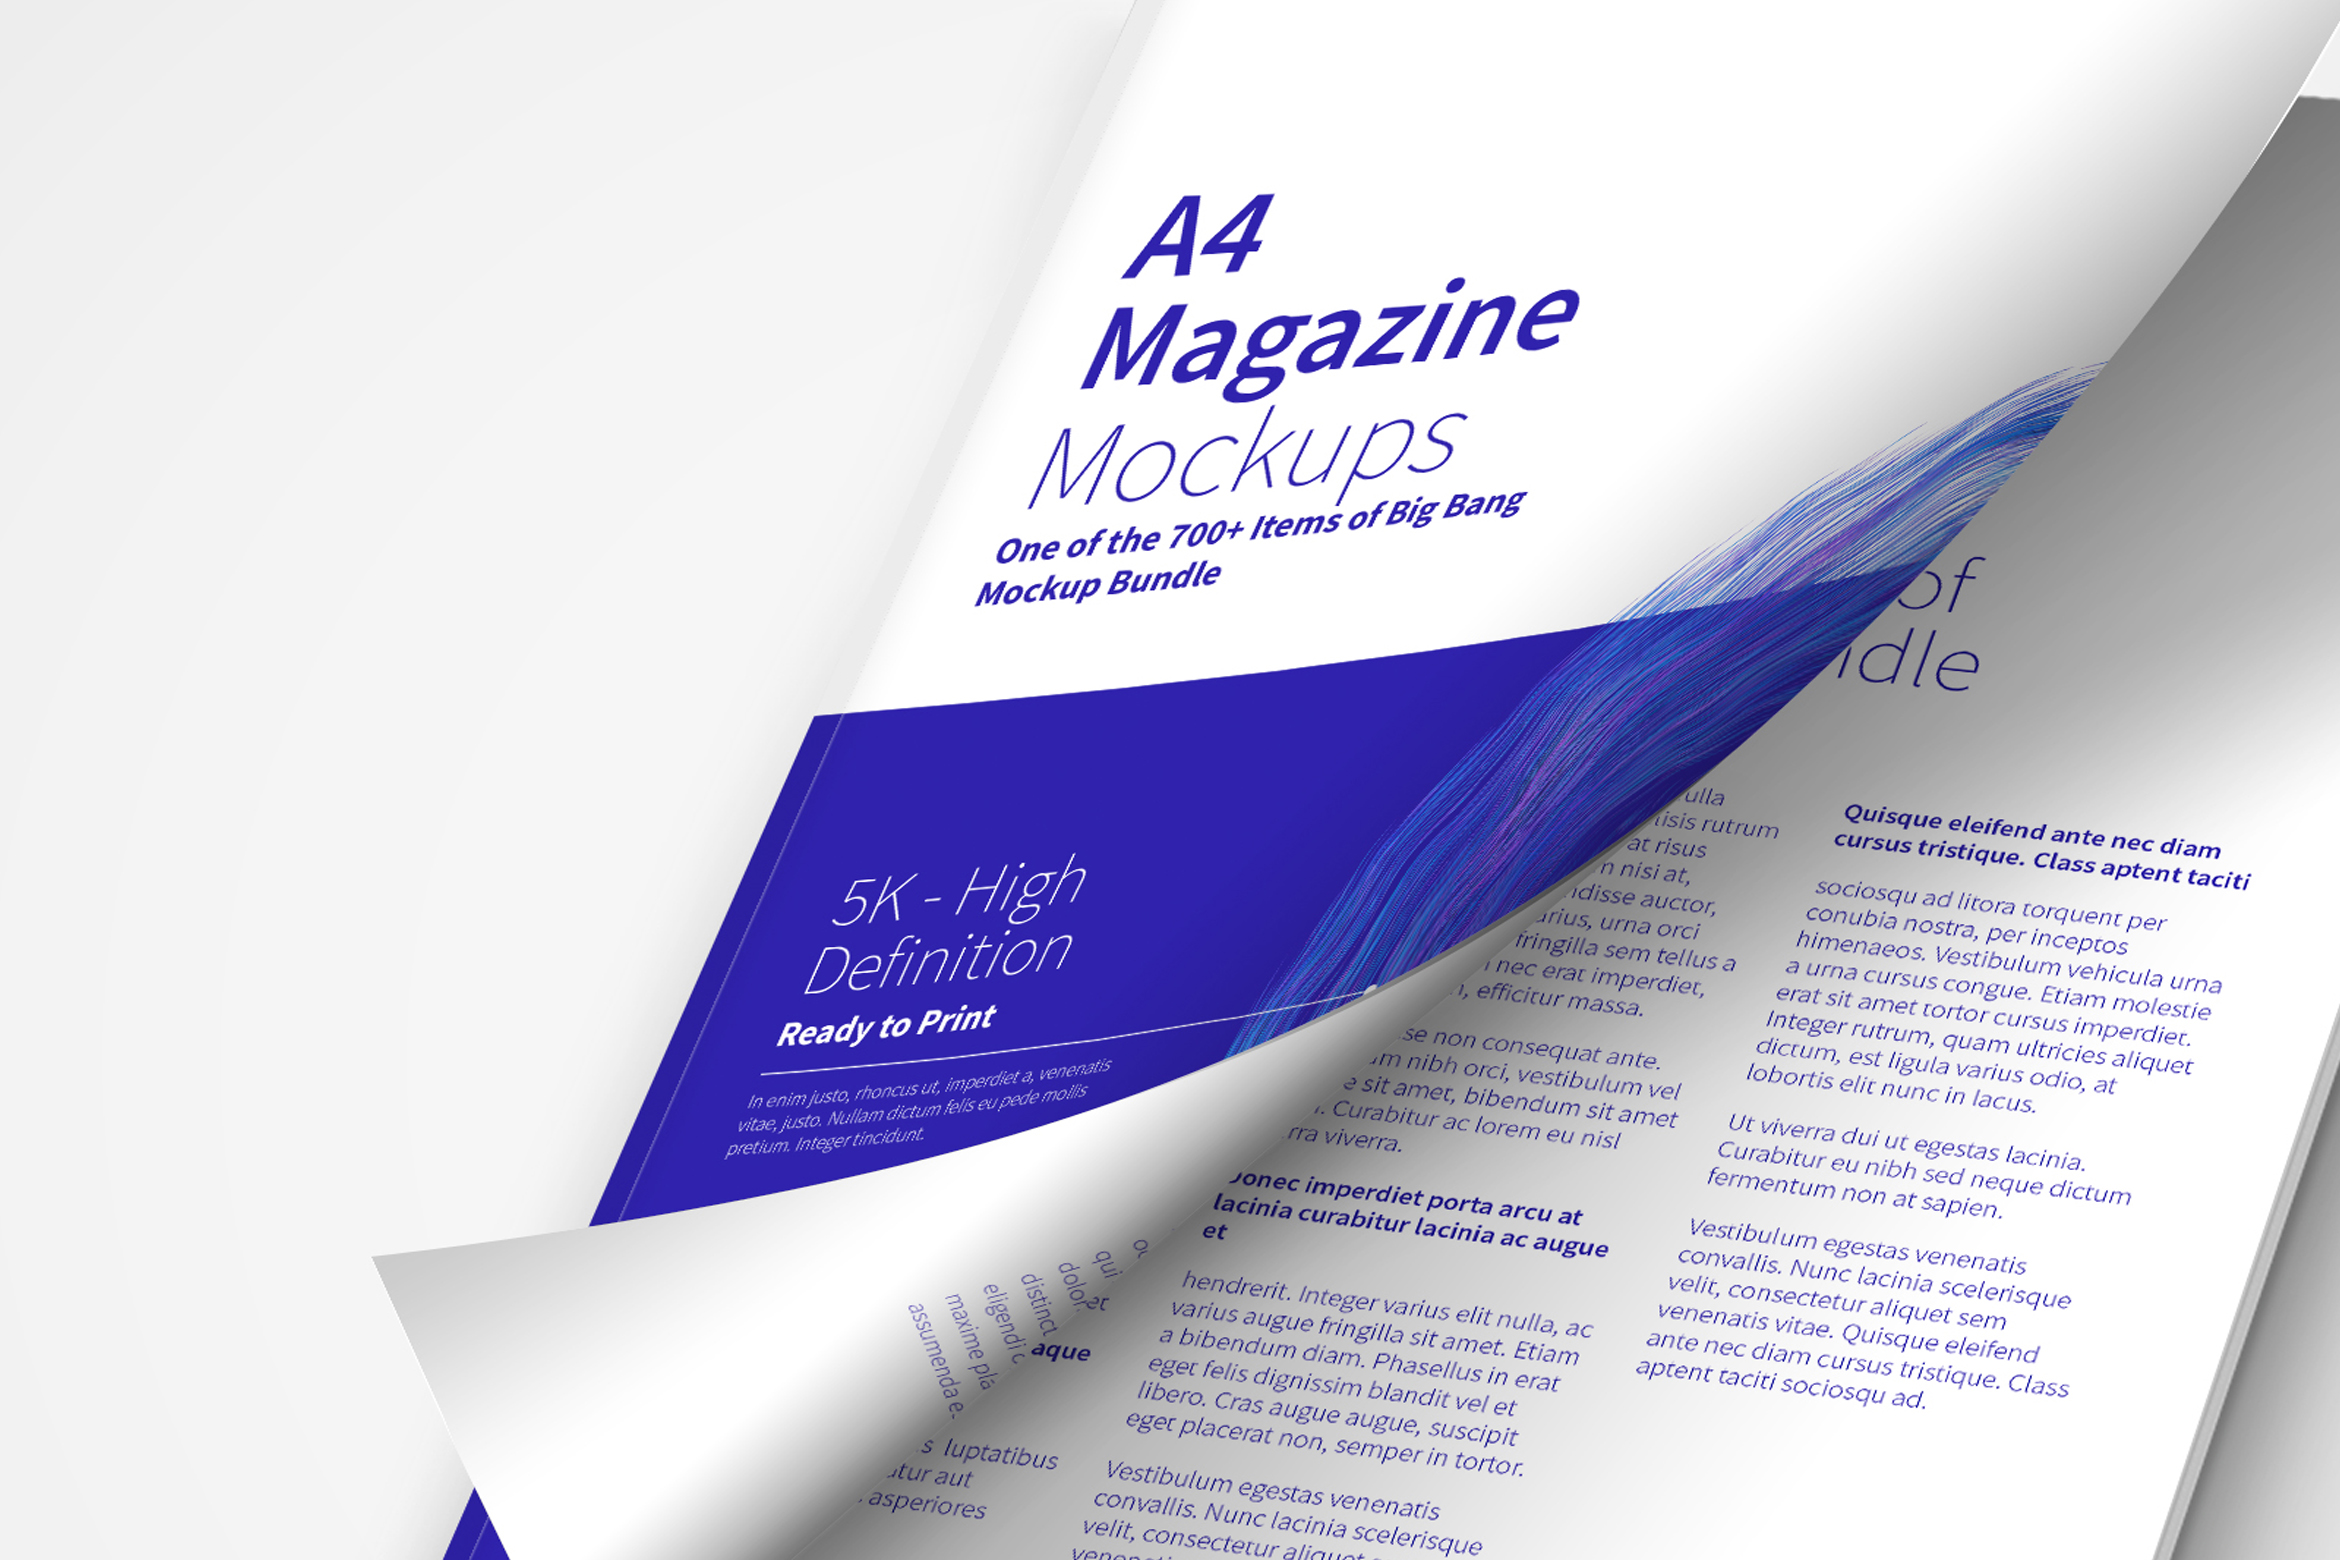 A4规格杂志封面翻页效果排版设计预览样机 A4 Magazine Mockup Cover Opening插图(2)